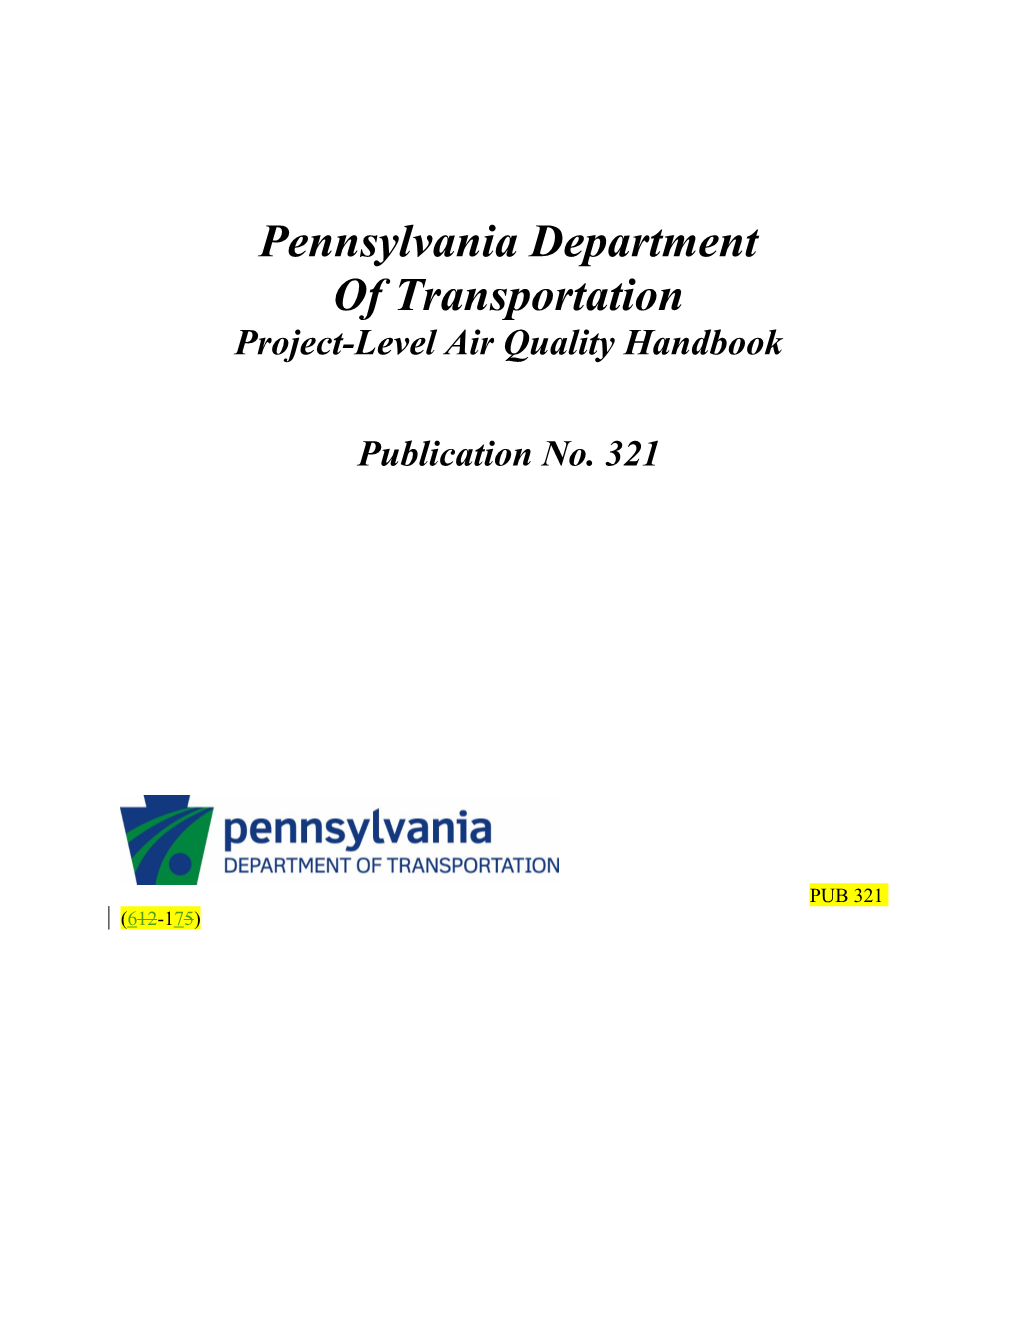 Project-Level Air Qualityhandbook